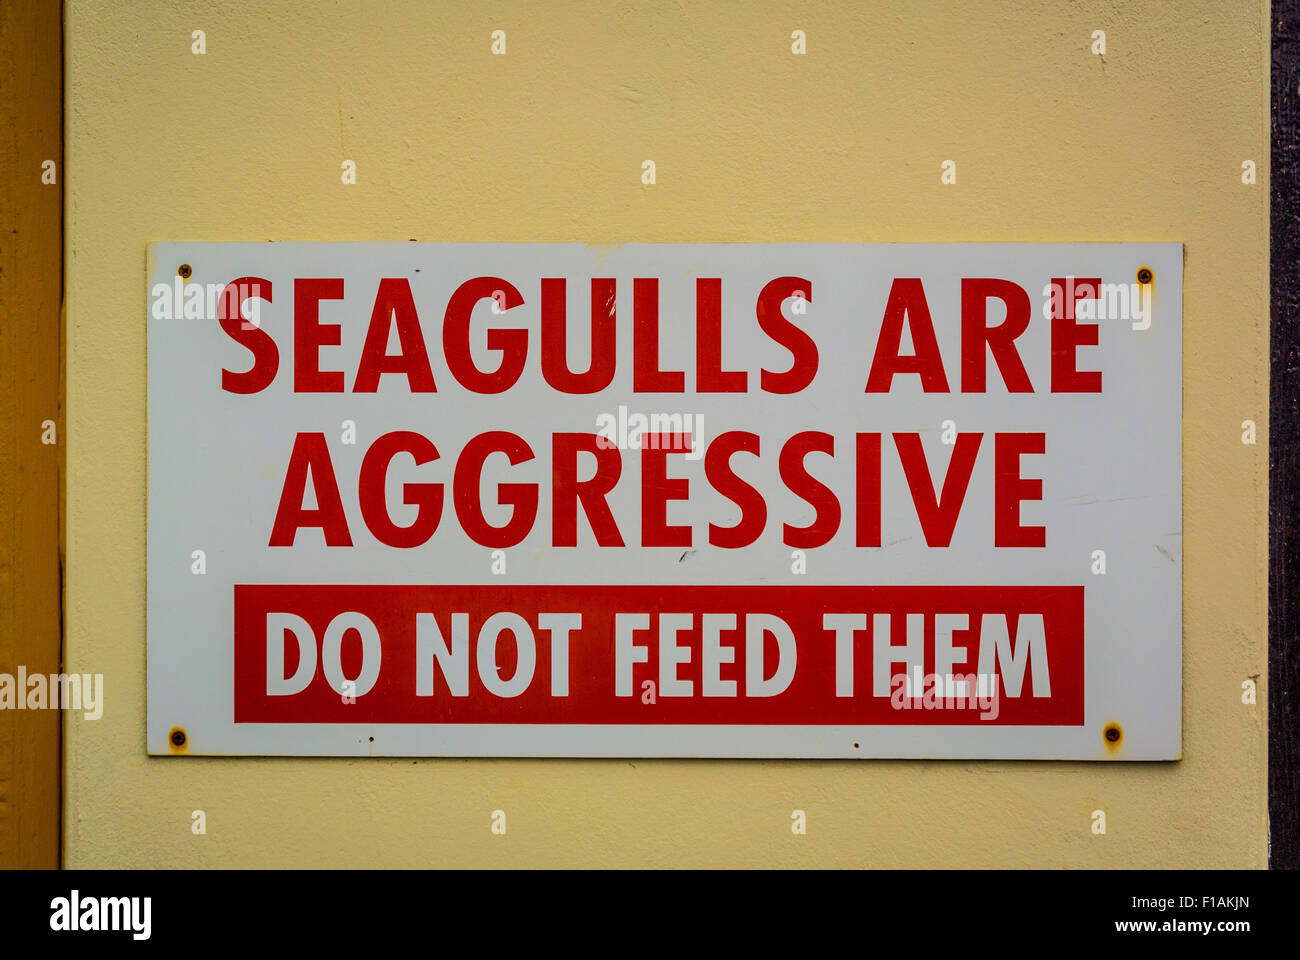 Seagulls are aggressive sign Stock Photo